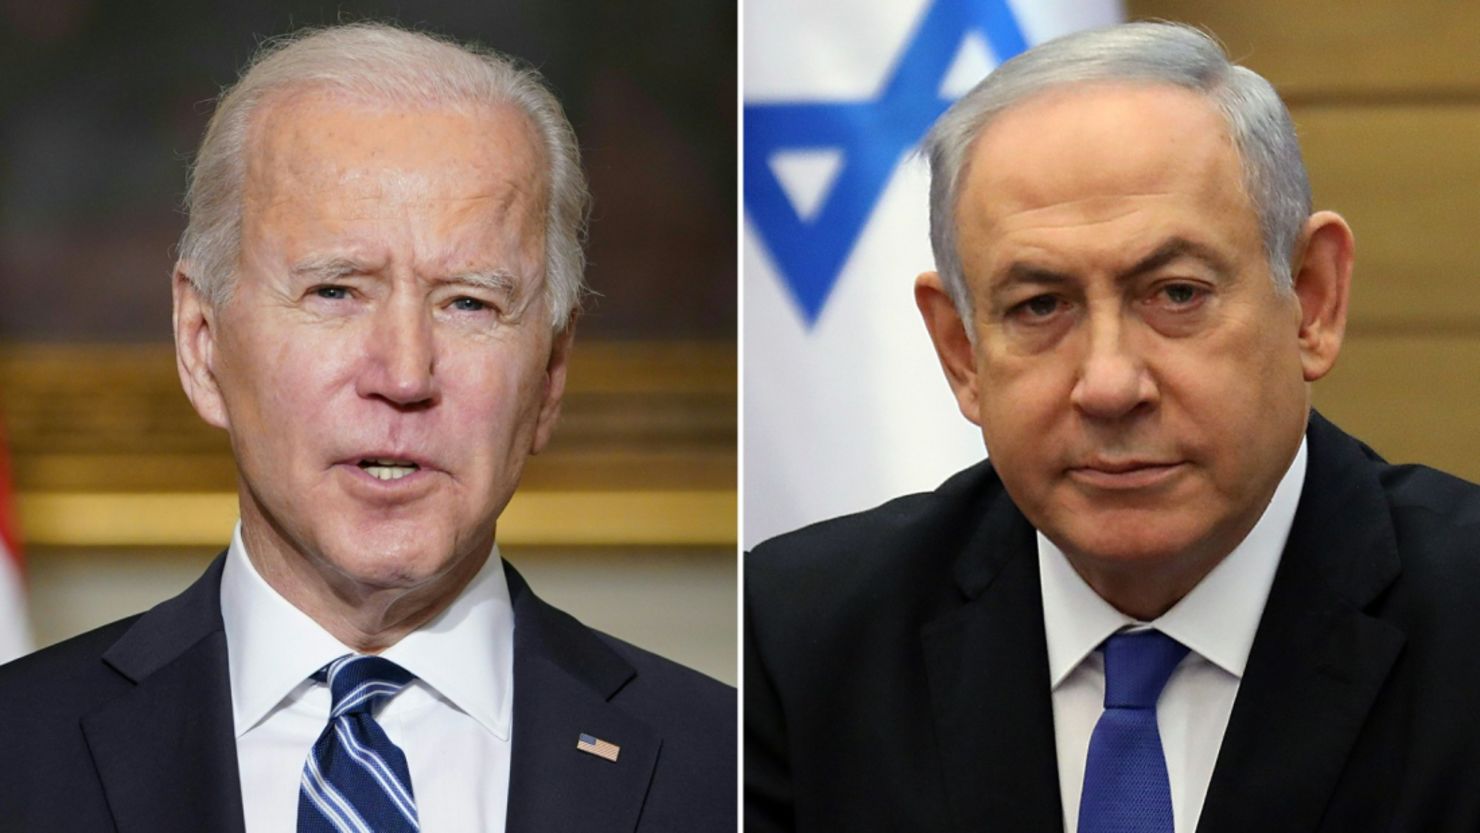 Biden speaks with Netanyahu after delay raised questions | CNN Politics